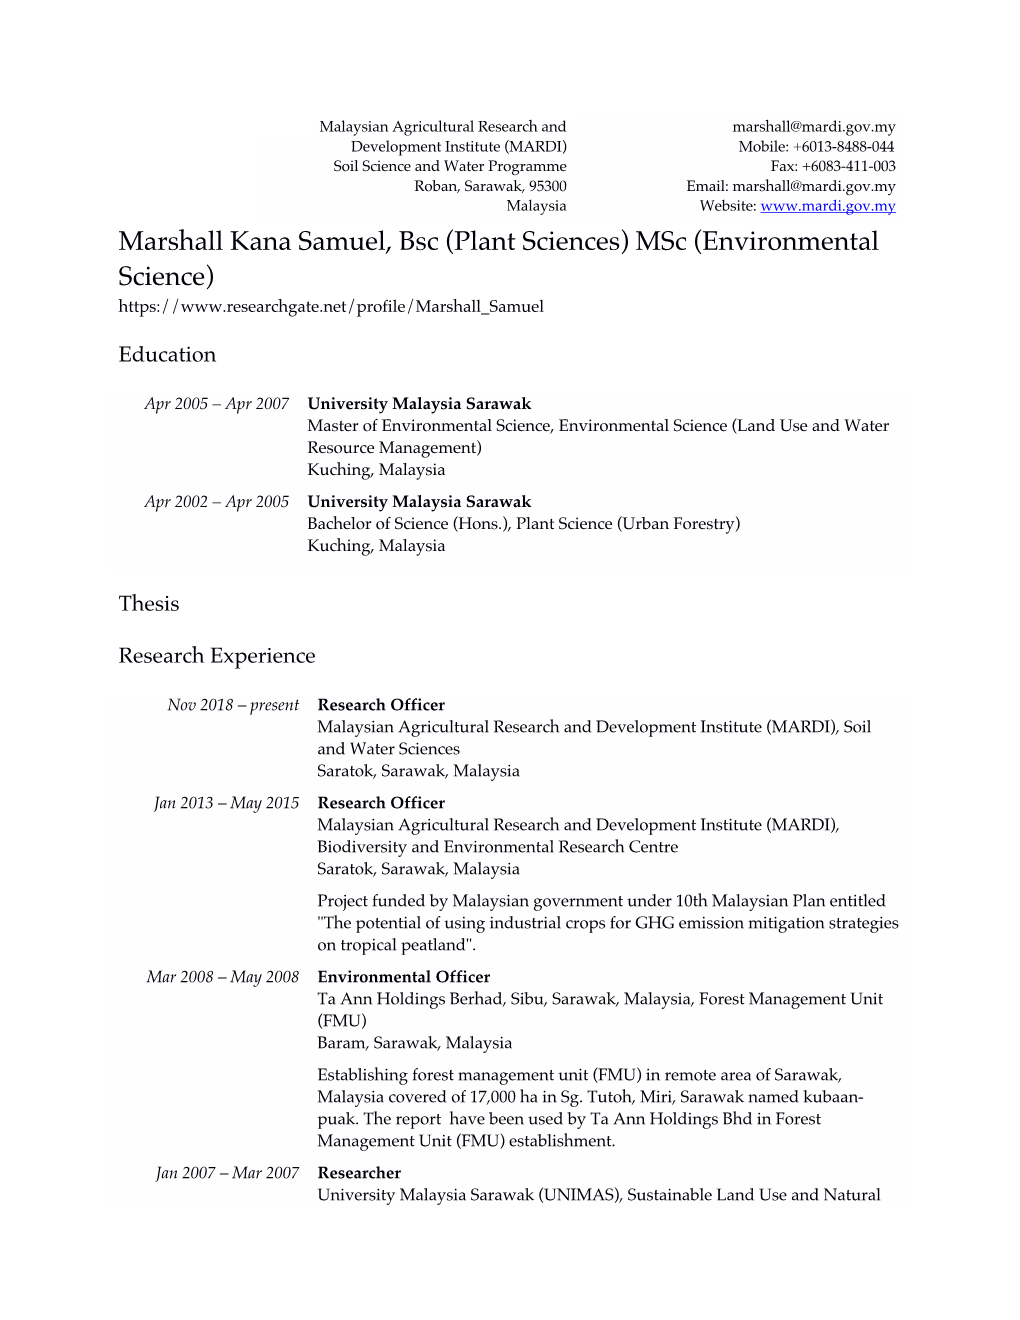 Marshall Kana Samuel, Bsc (Plant Sciences) Msc (Environmental Science)